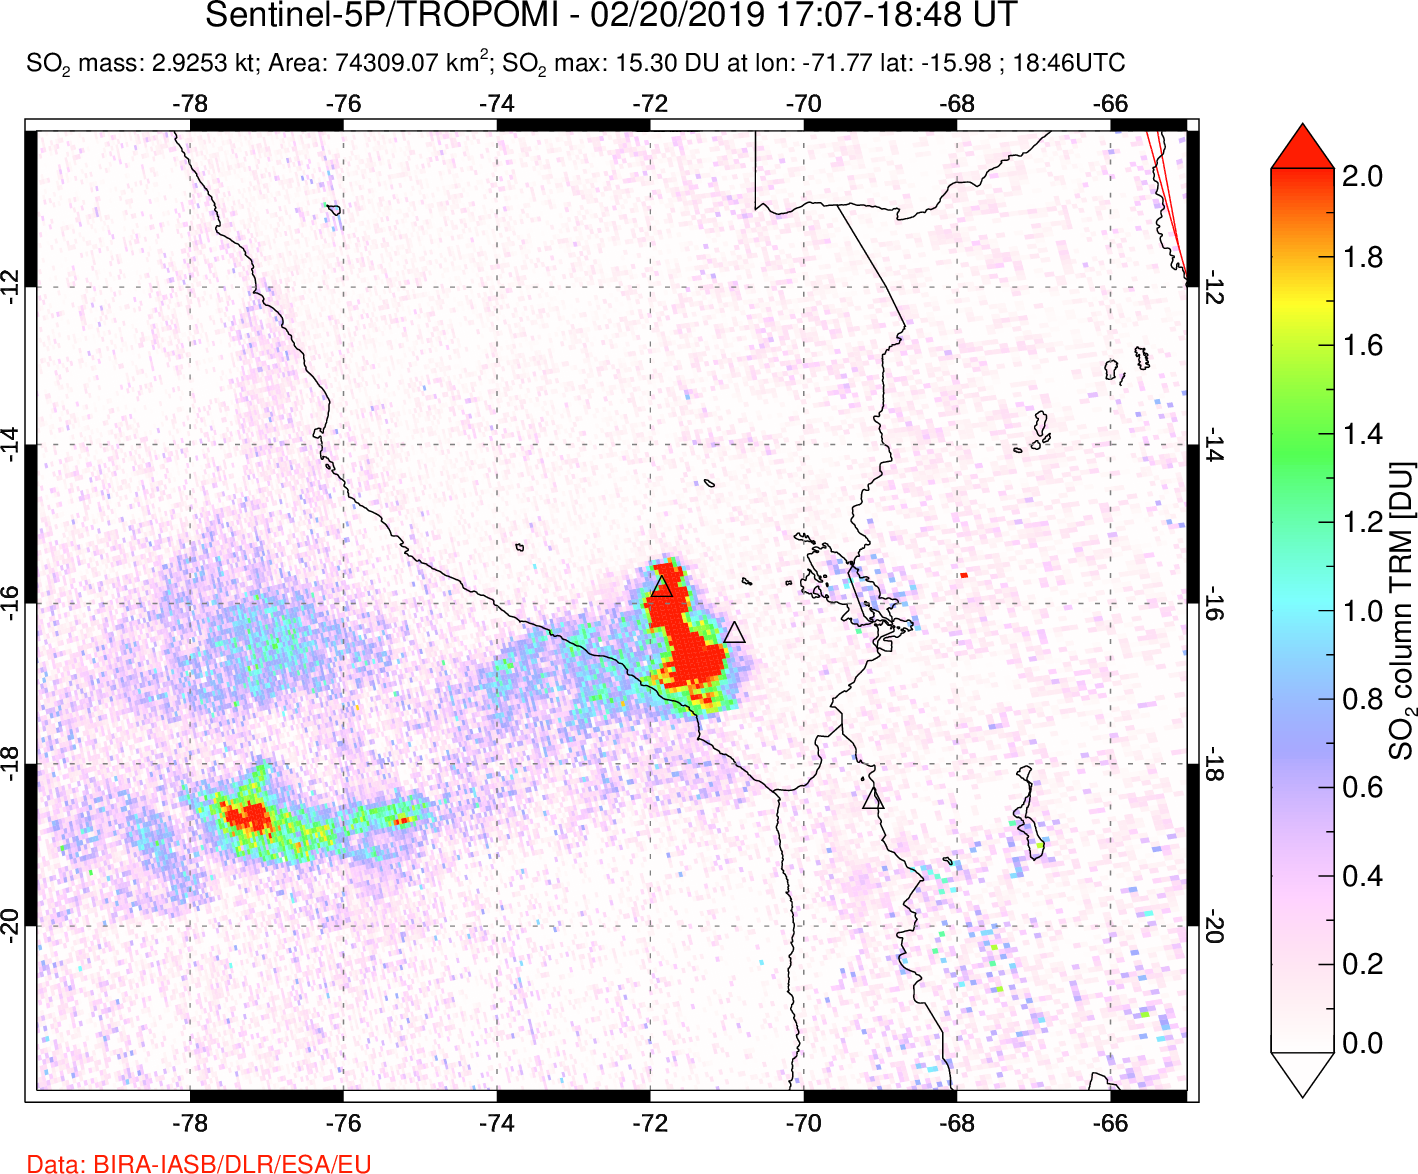 A sulfur dioxide image over Peru on Feb 20, 2019.